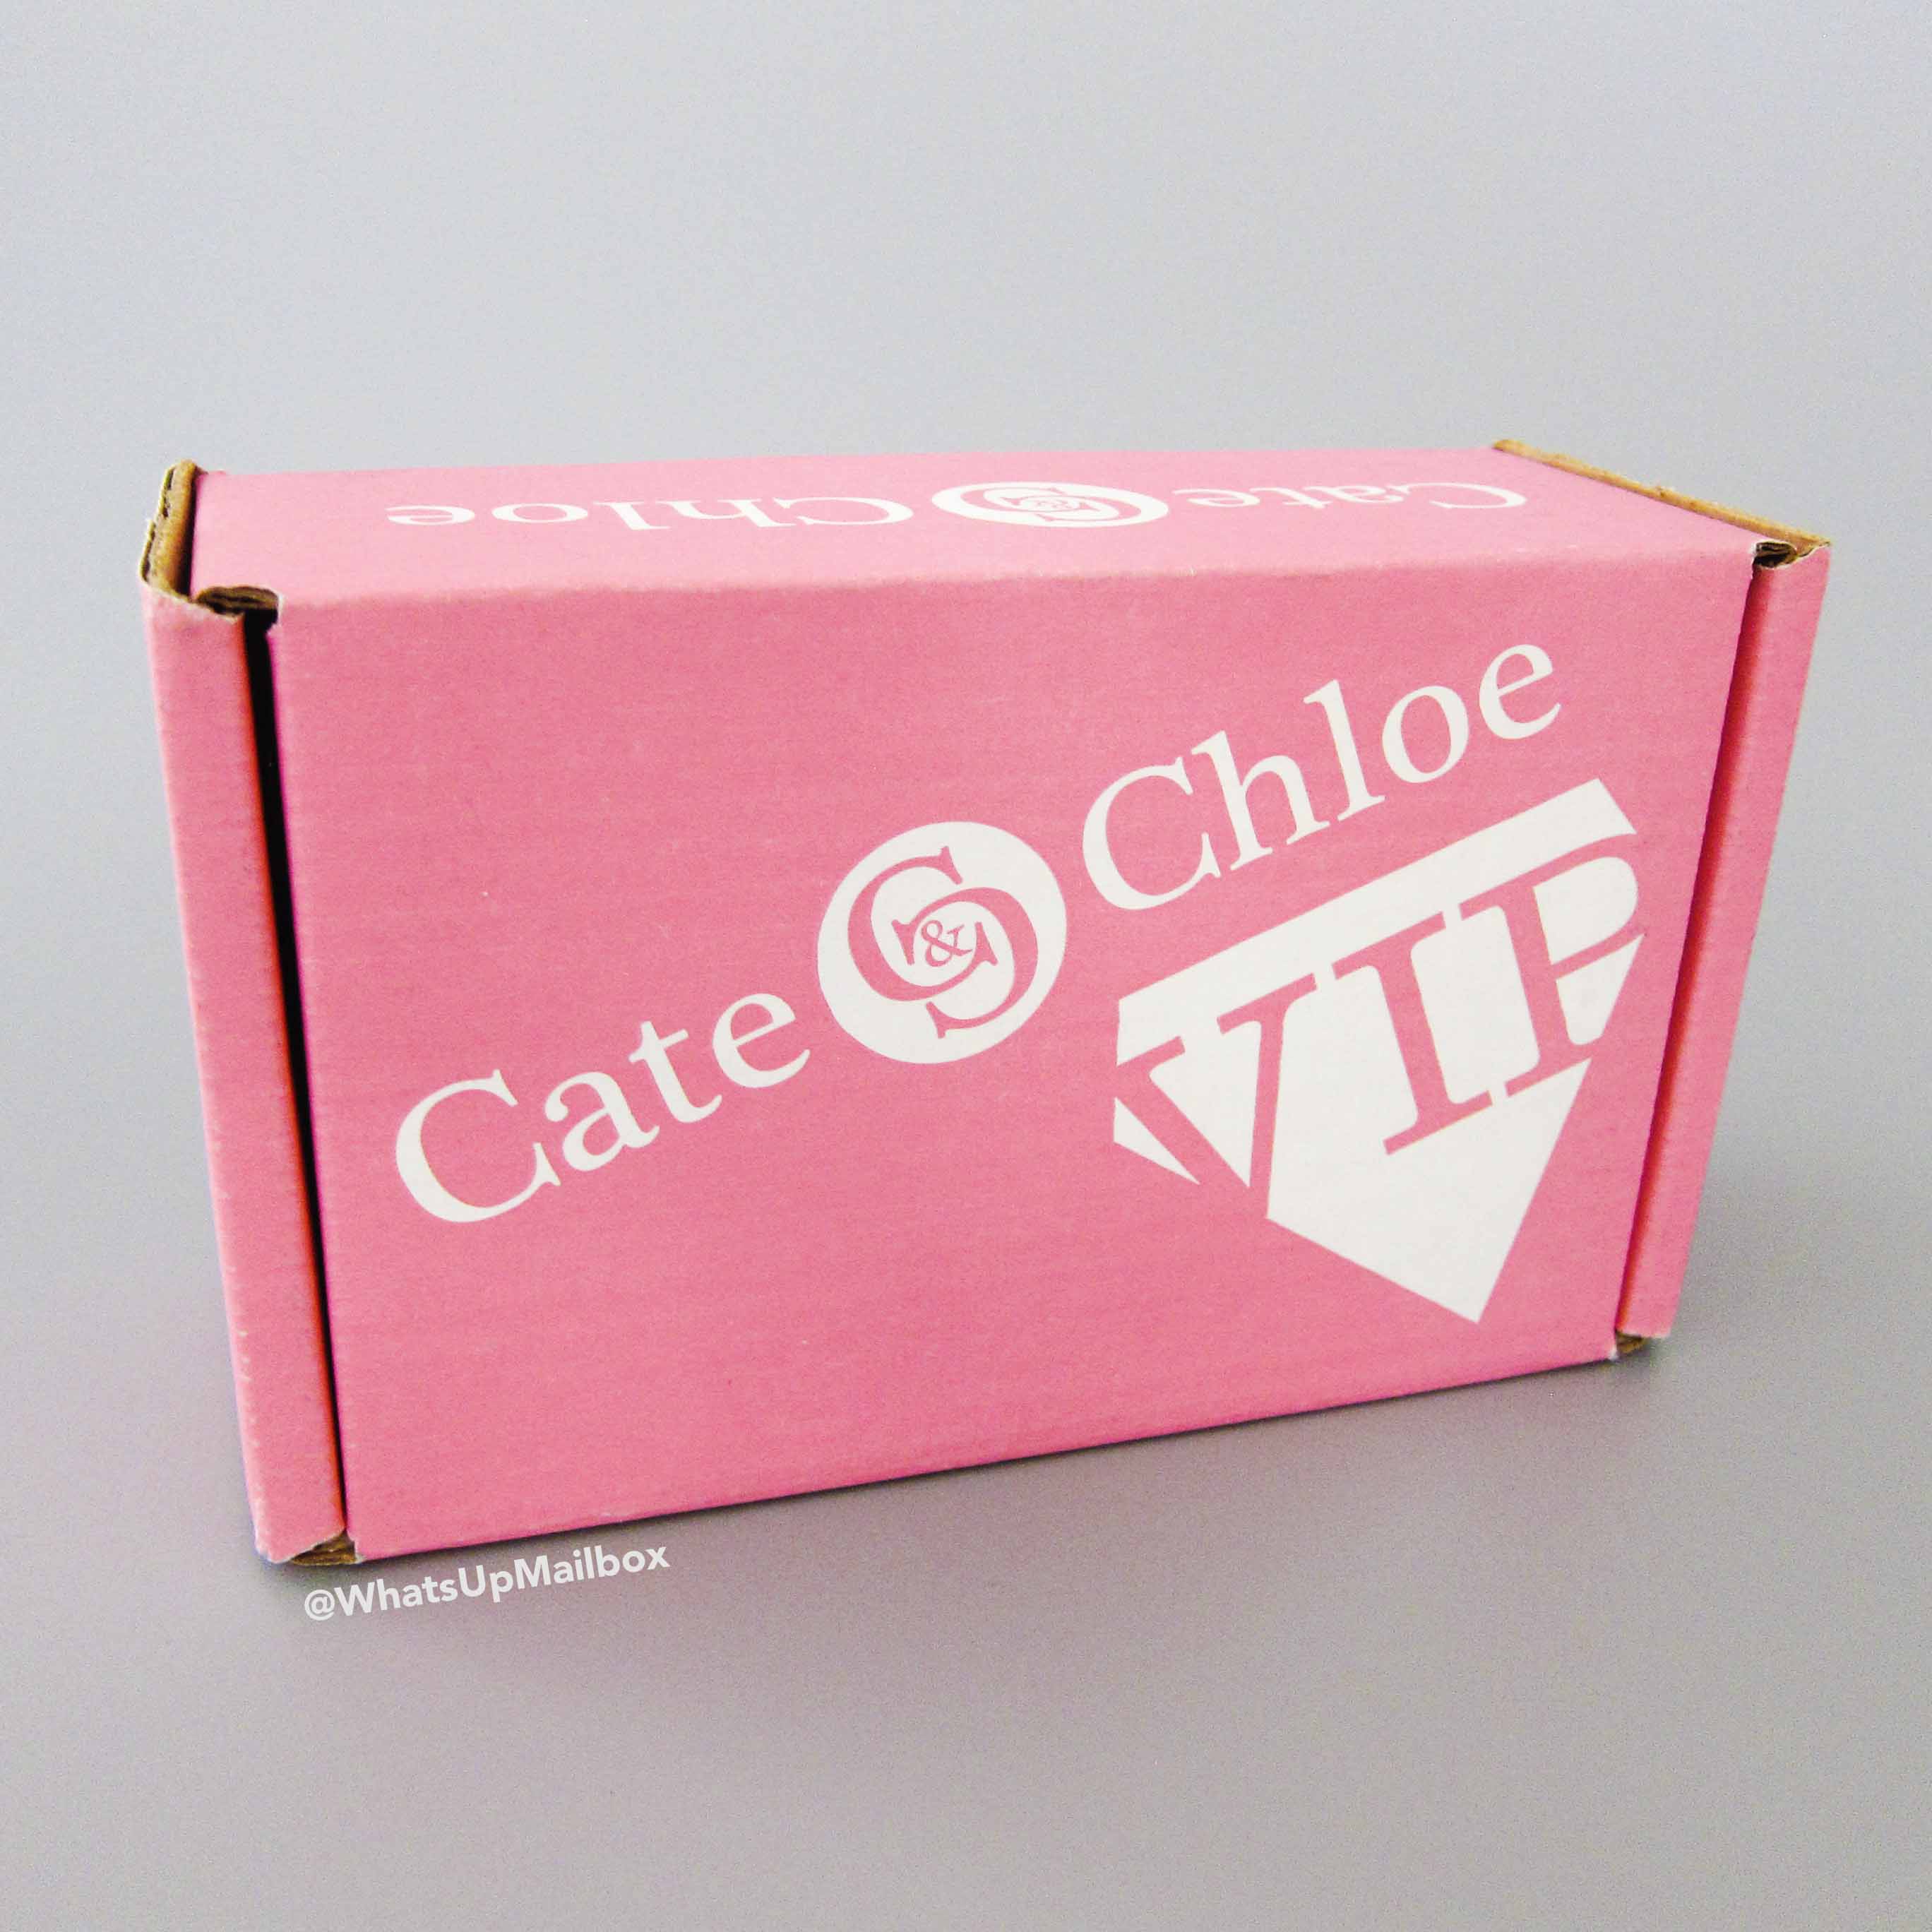 Cate & Chloe VIP October 2016 Box